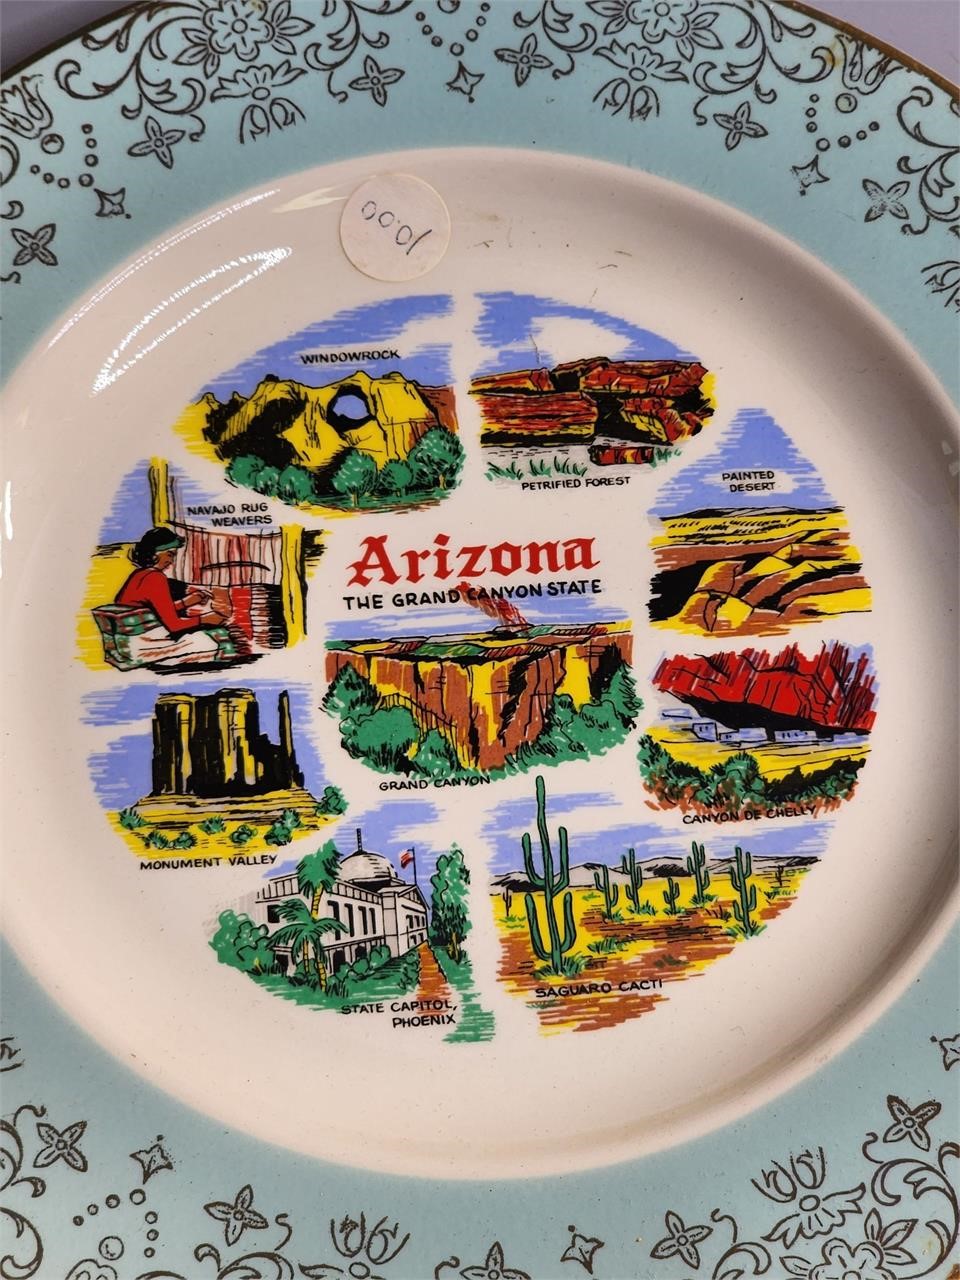 Arizona collector's plates